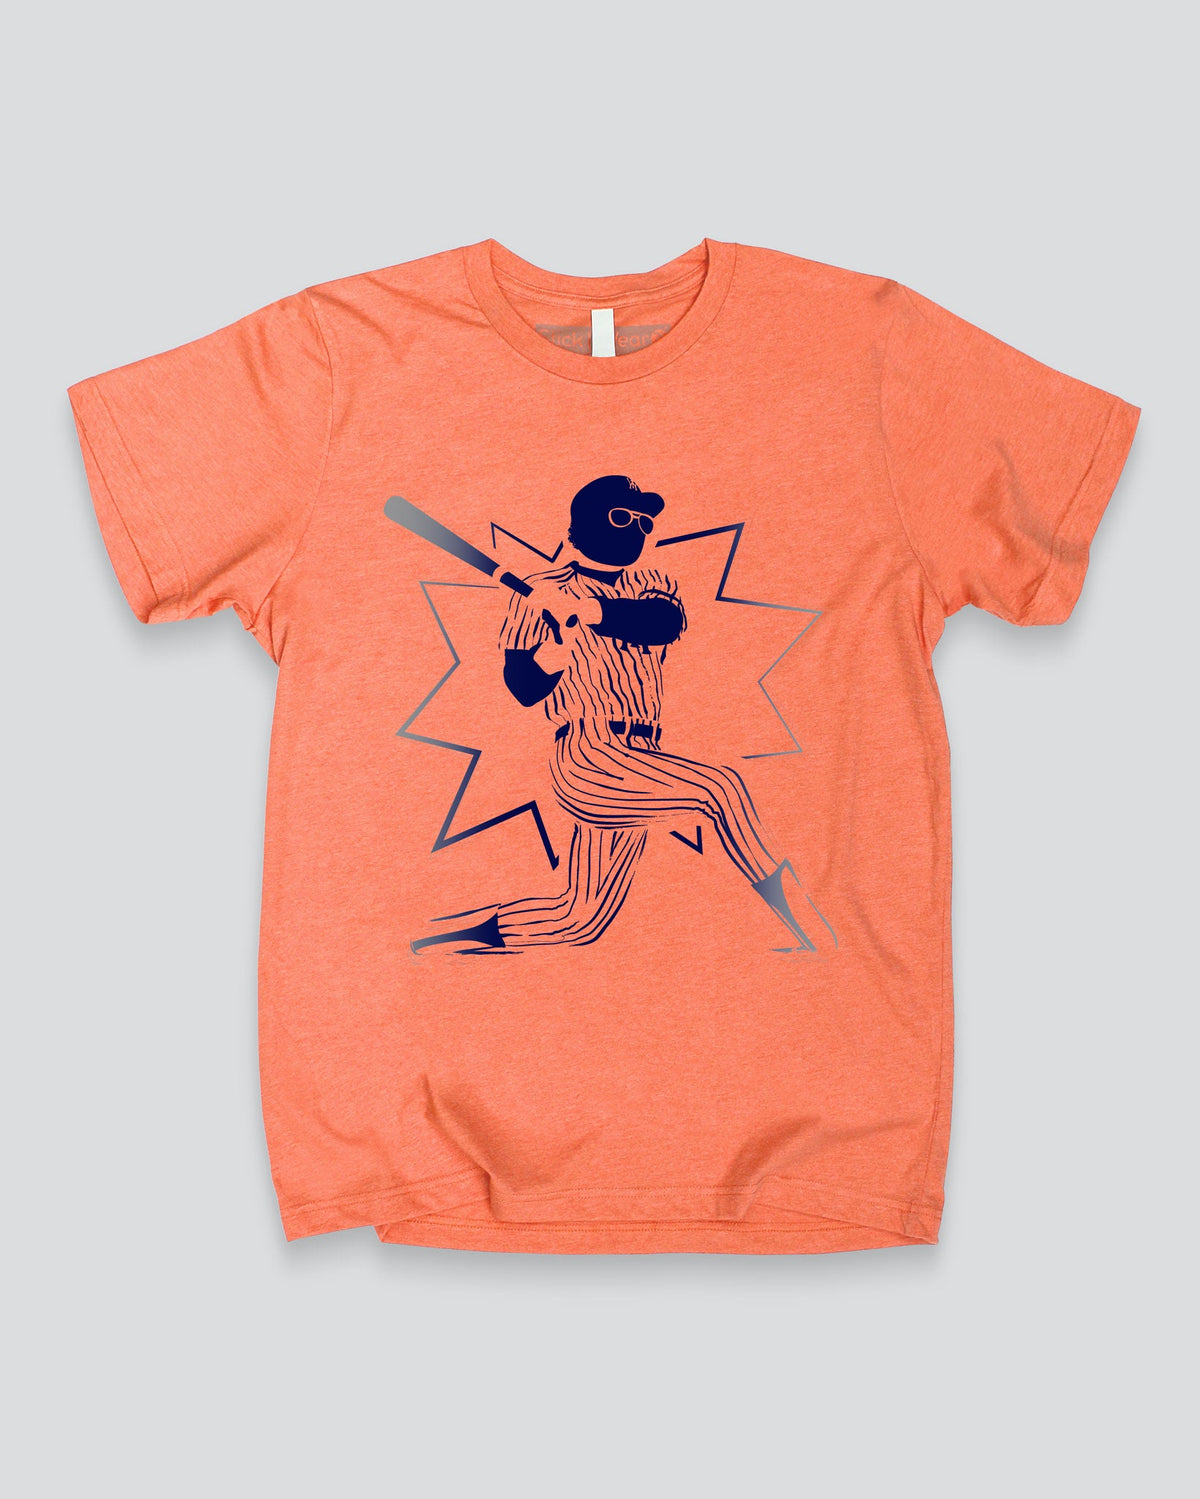 CANDY BAR DREAMS Baseball Stance T-shirt